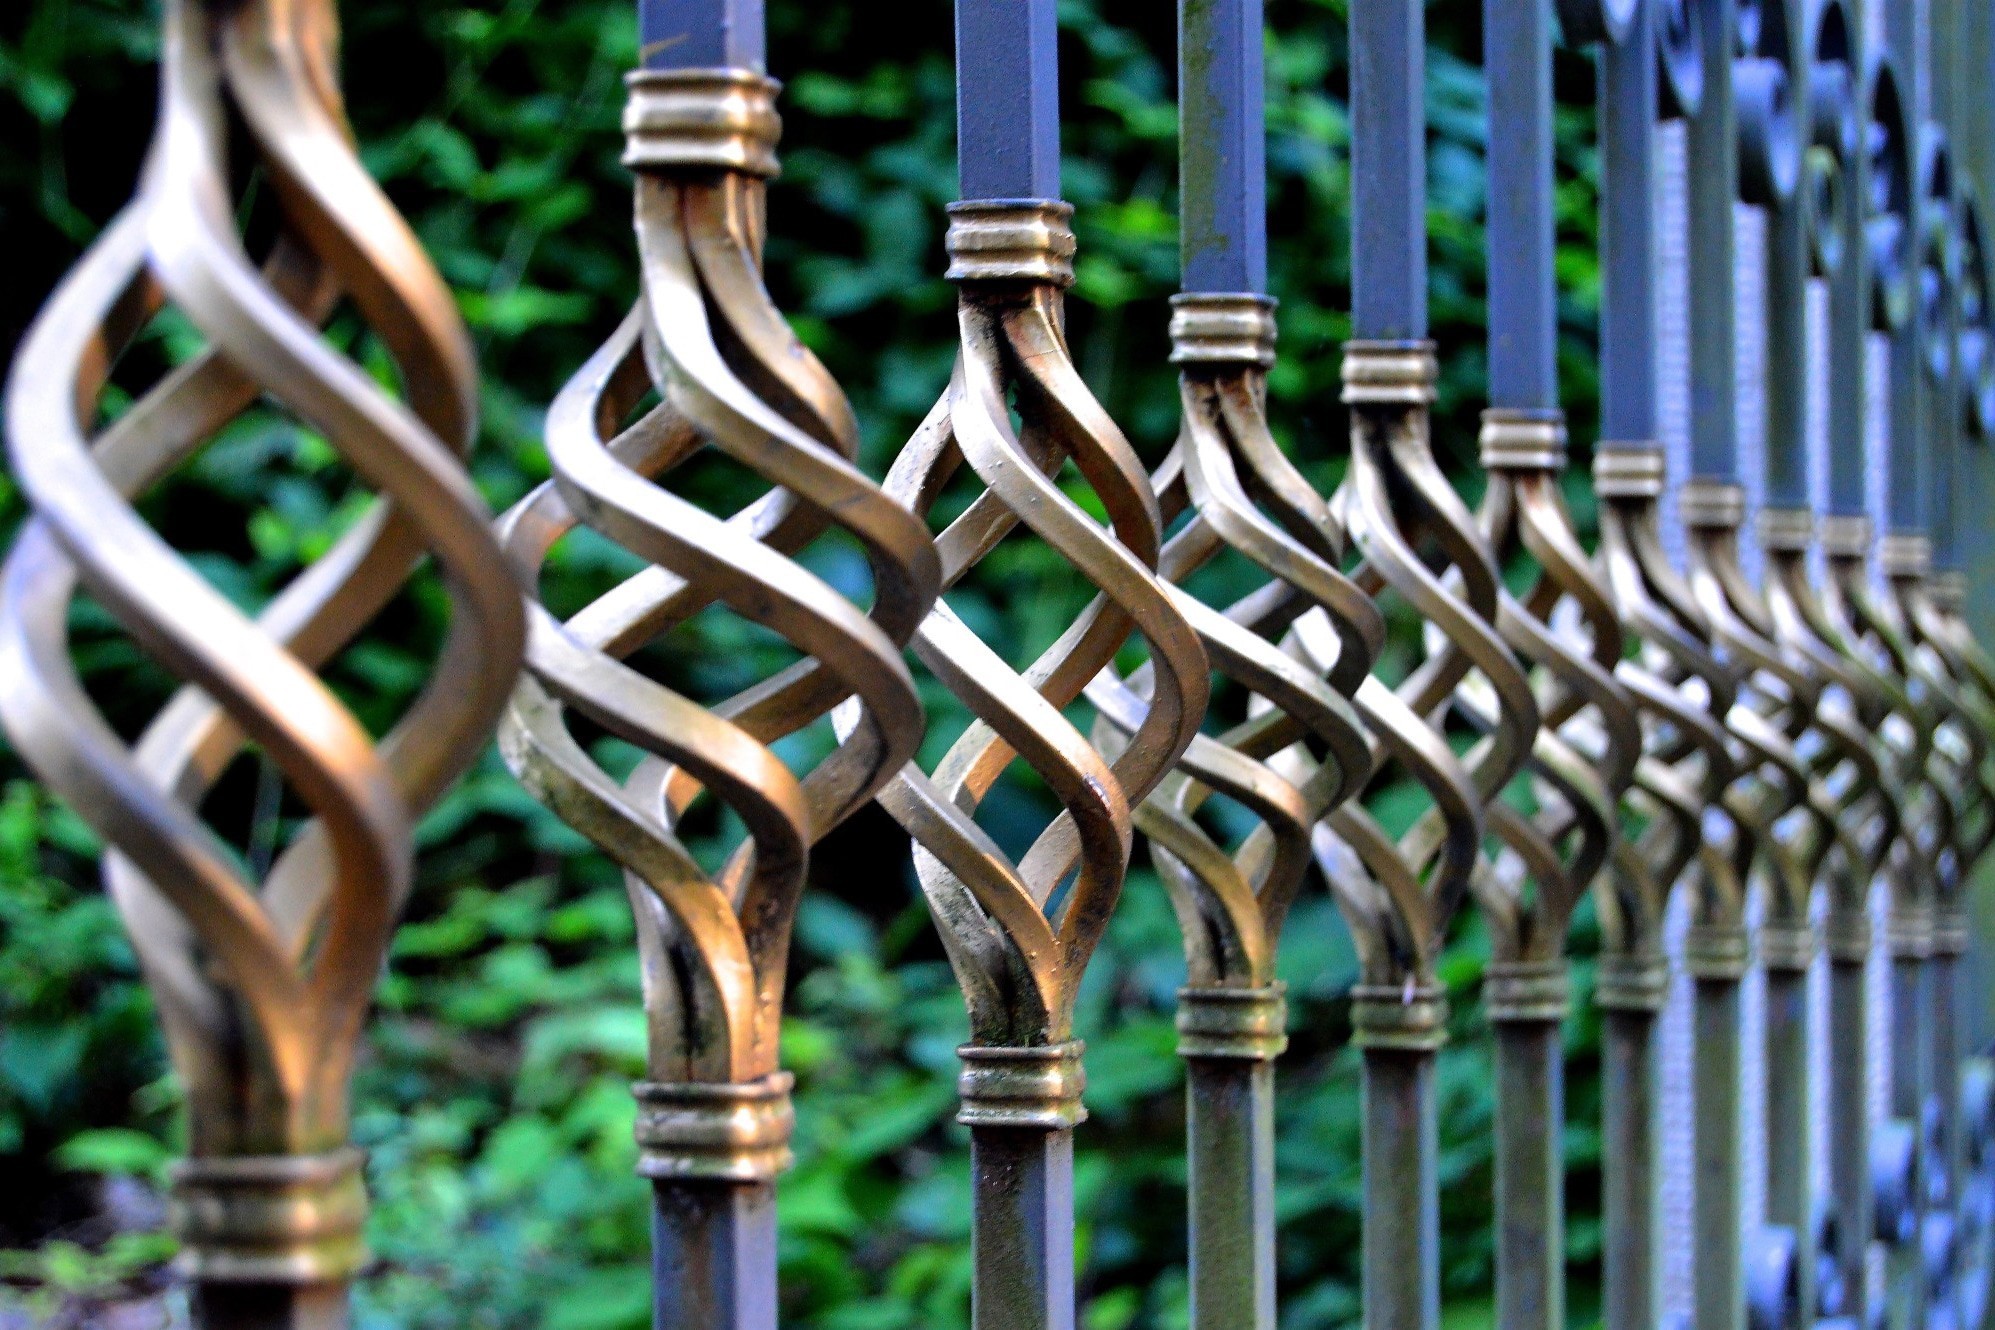 Decorative Fence